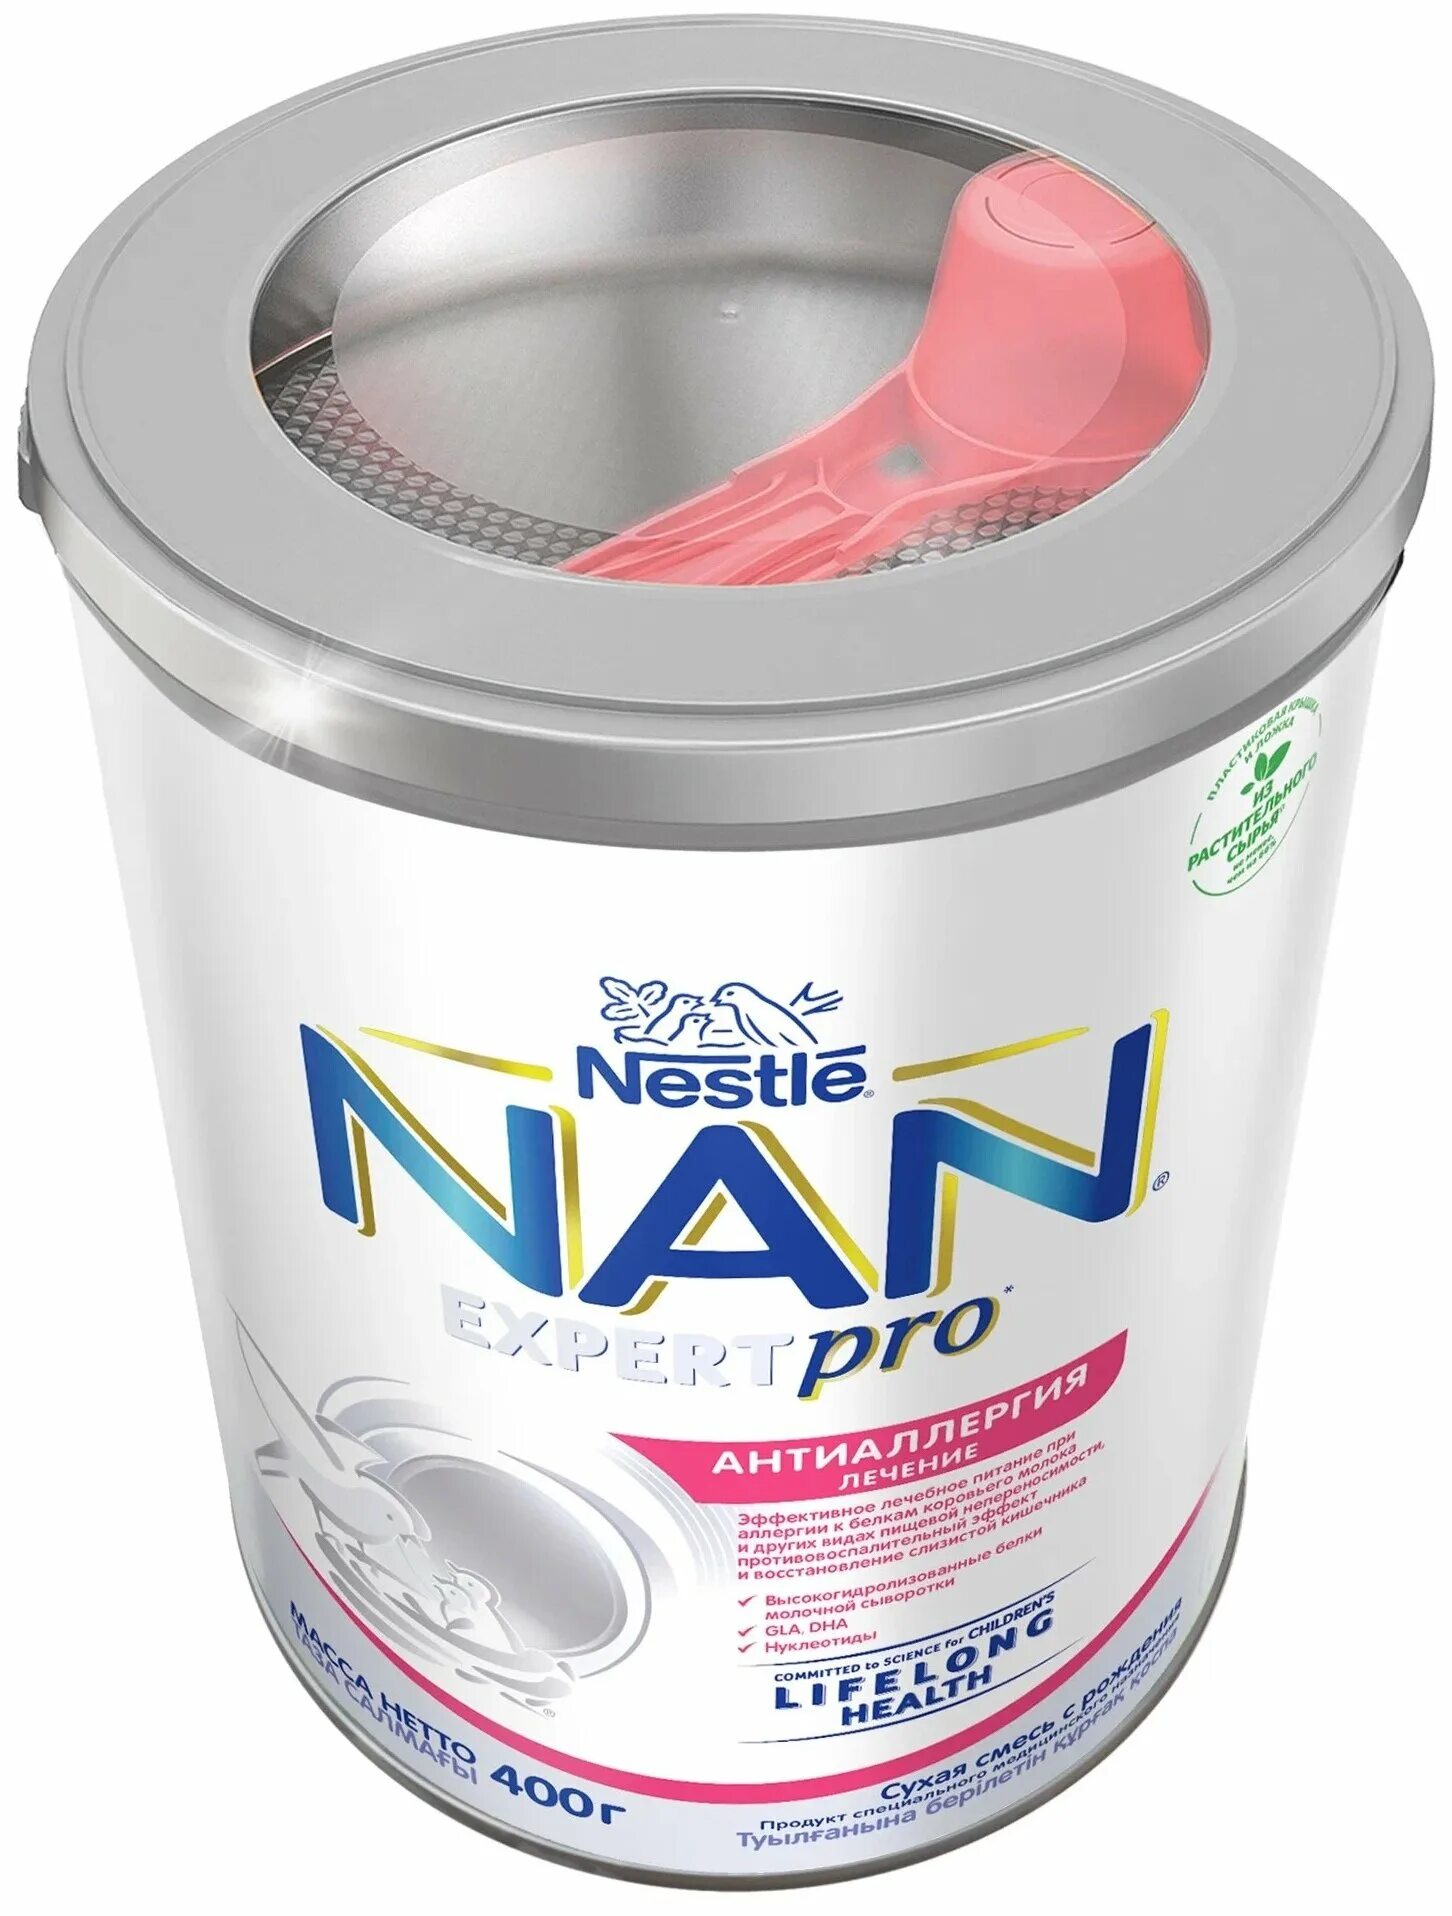 Нан антиаллергия купить. Nan (Nestle) антиаллергия Expert Pro,. Nan антиаллергия 400г. Смесь nan Expert Pro. Nan Expert Pro антиаллергия 2.